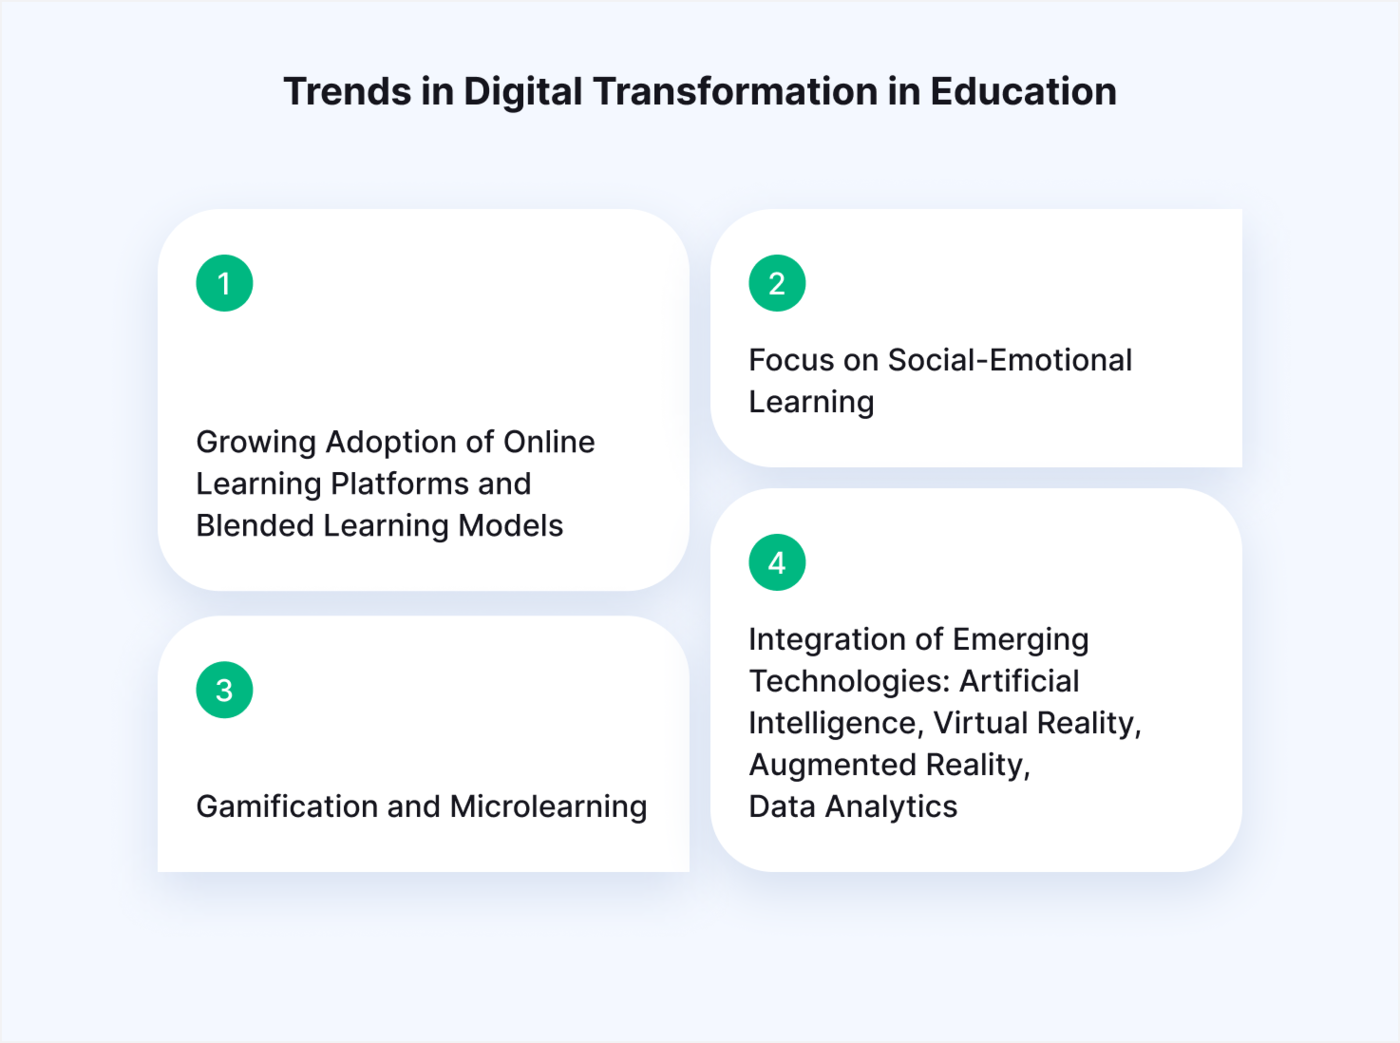 Digital transformation trends in education